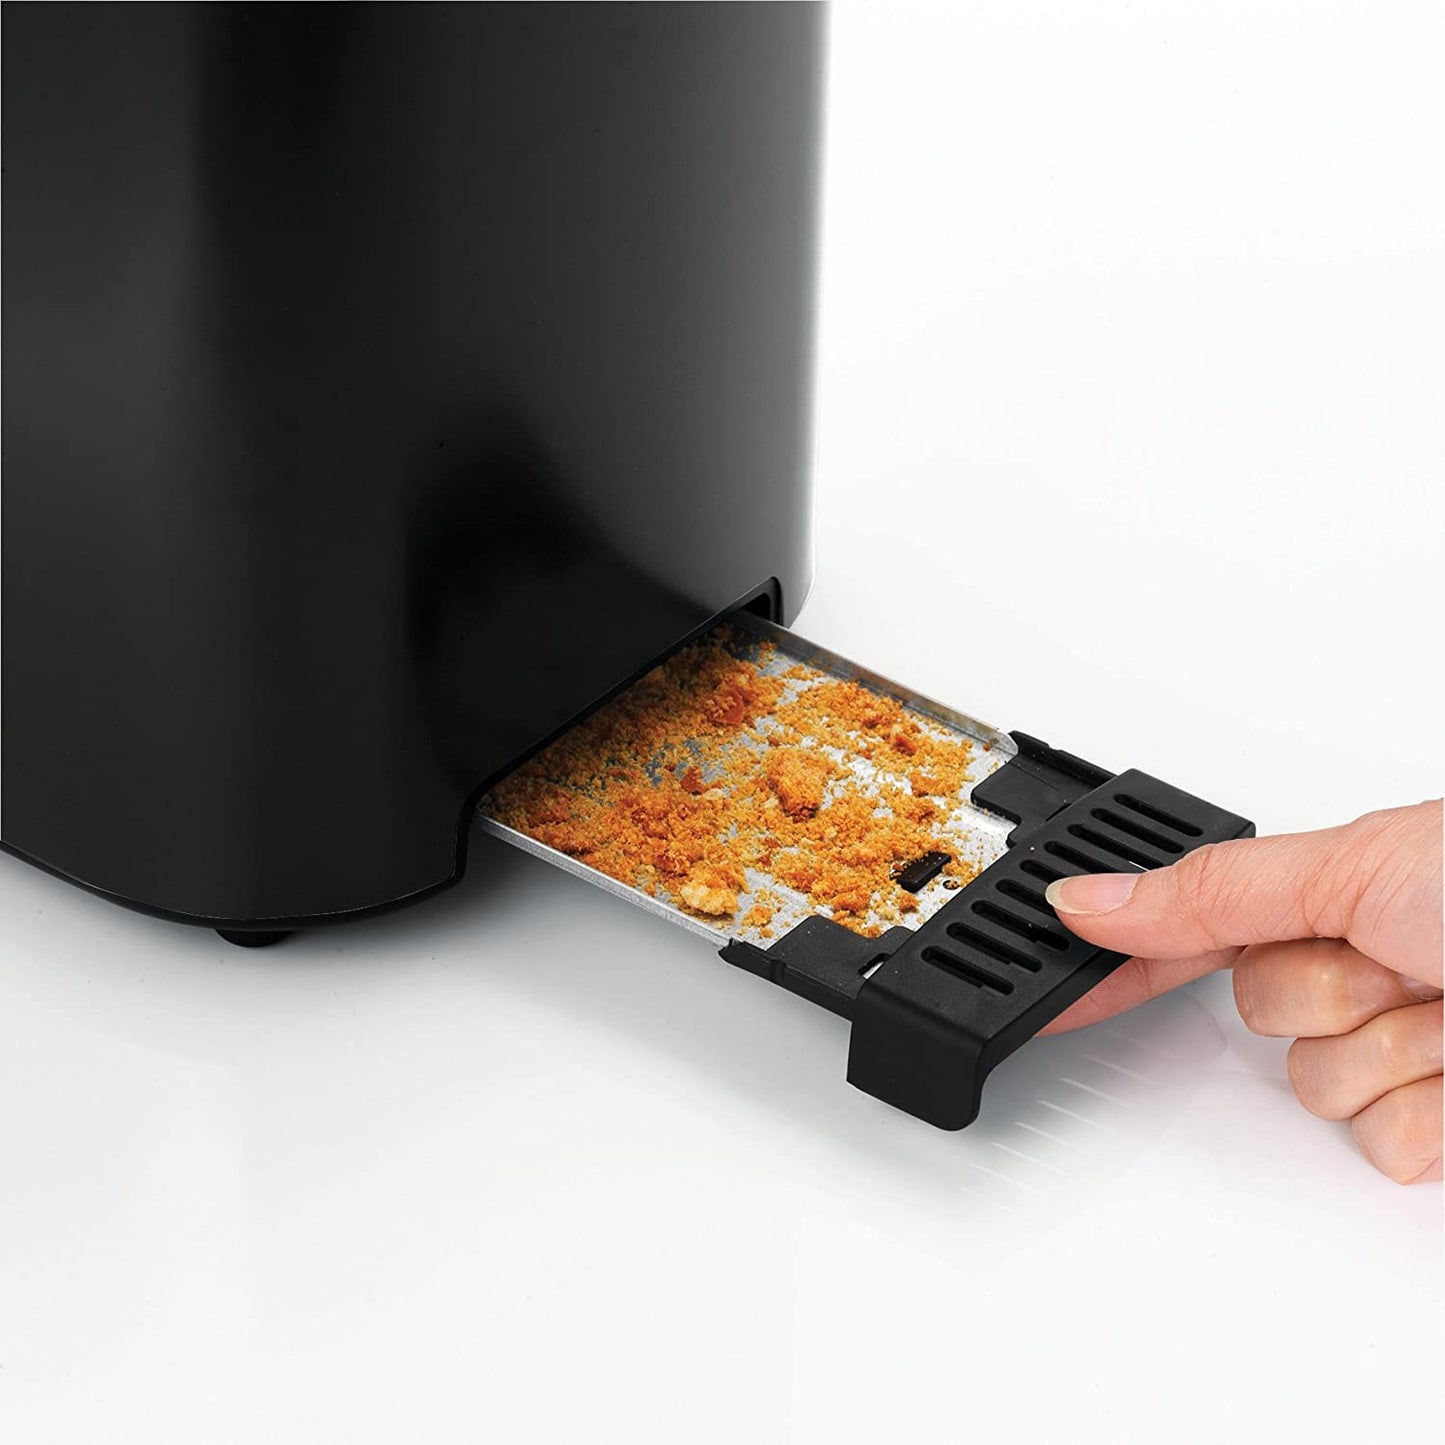 Morphy Richards 222055 Equip 2 Slice Toaster 850W Brushed Inox